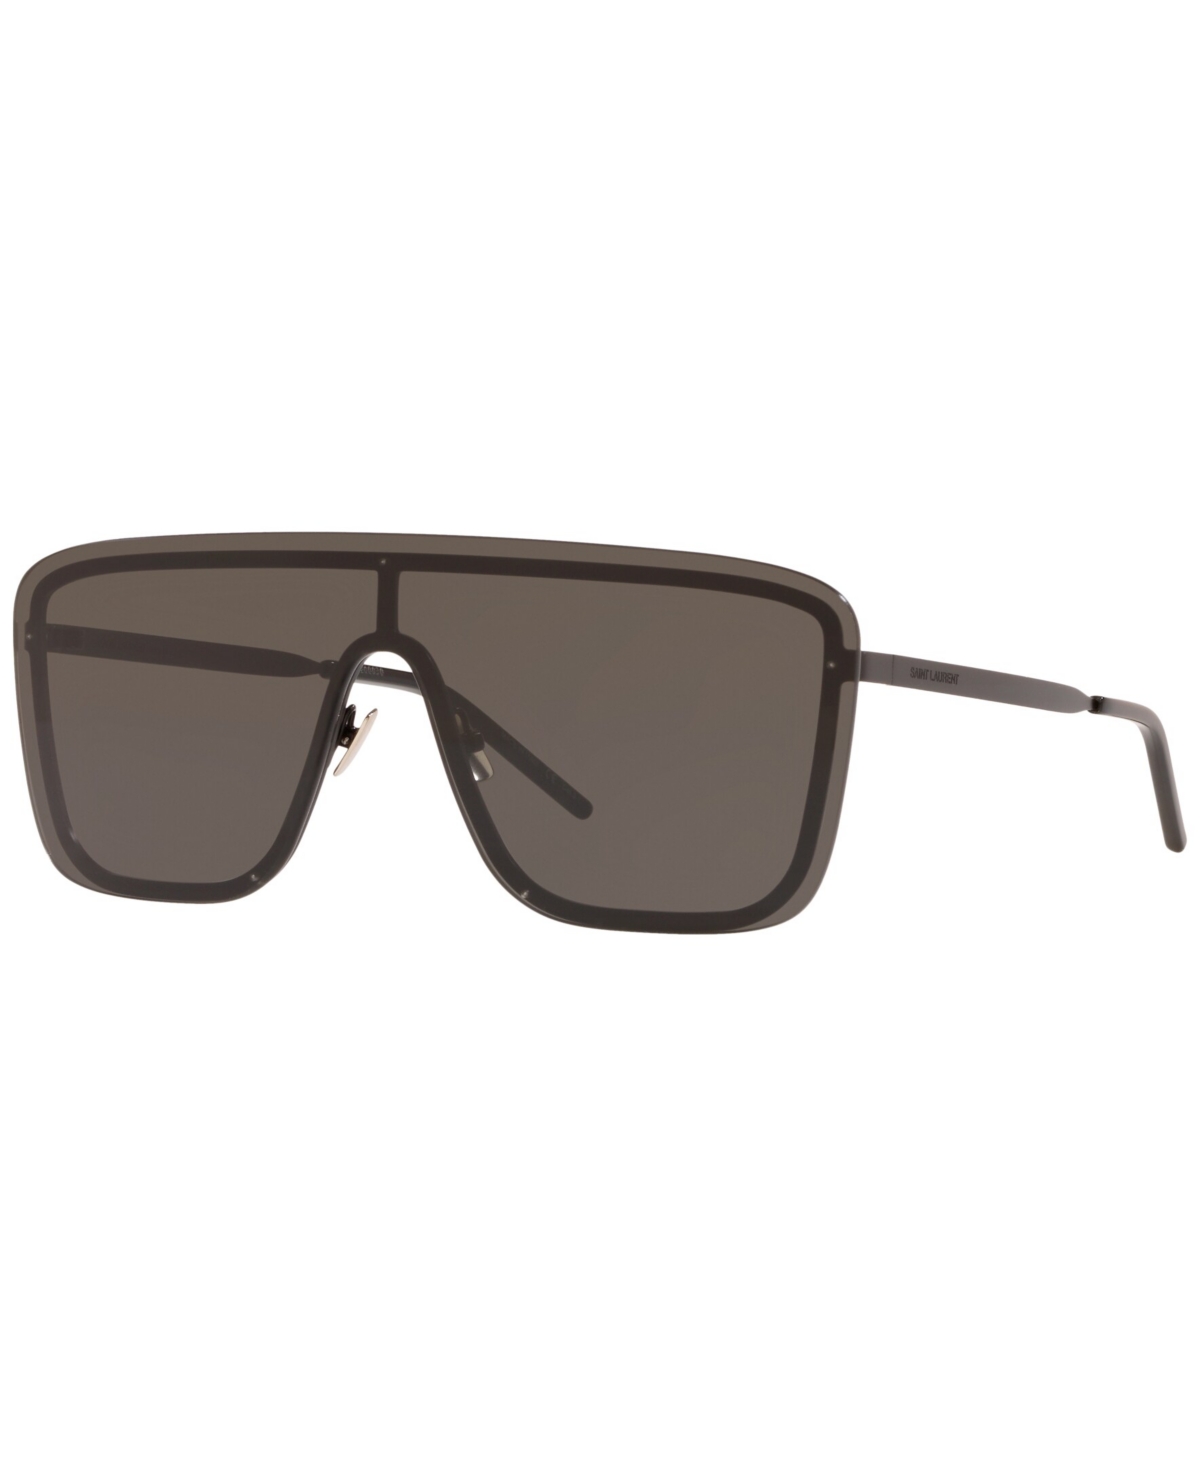 Saint Laurent Unisex Sunglasses, Sl 364 46